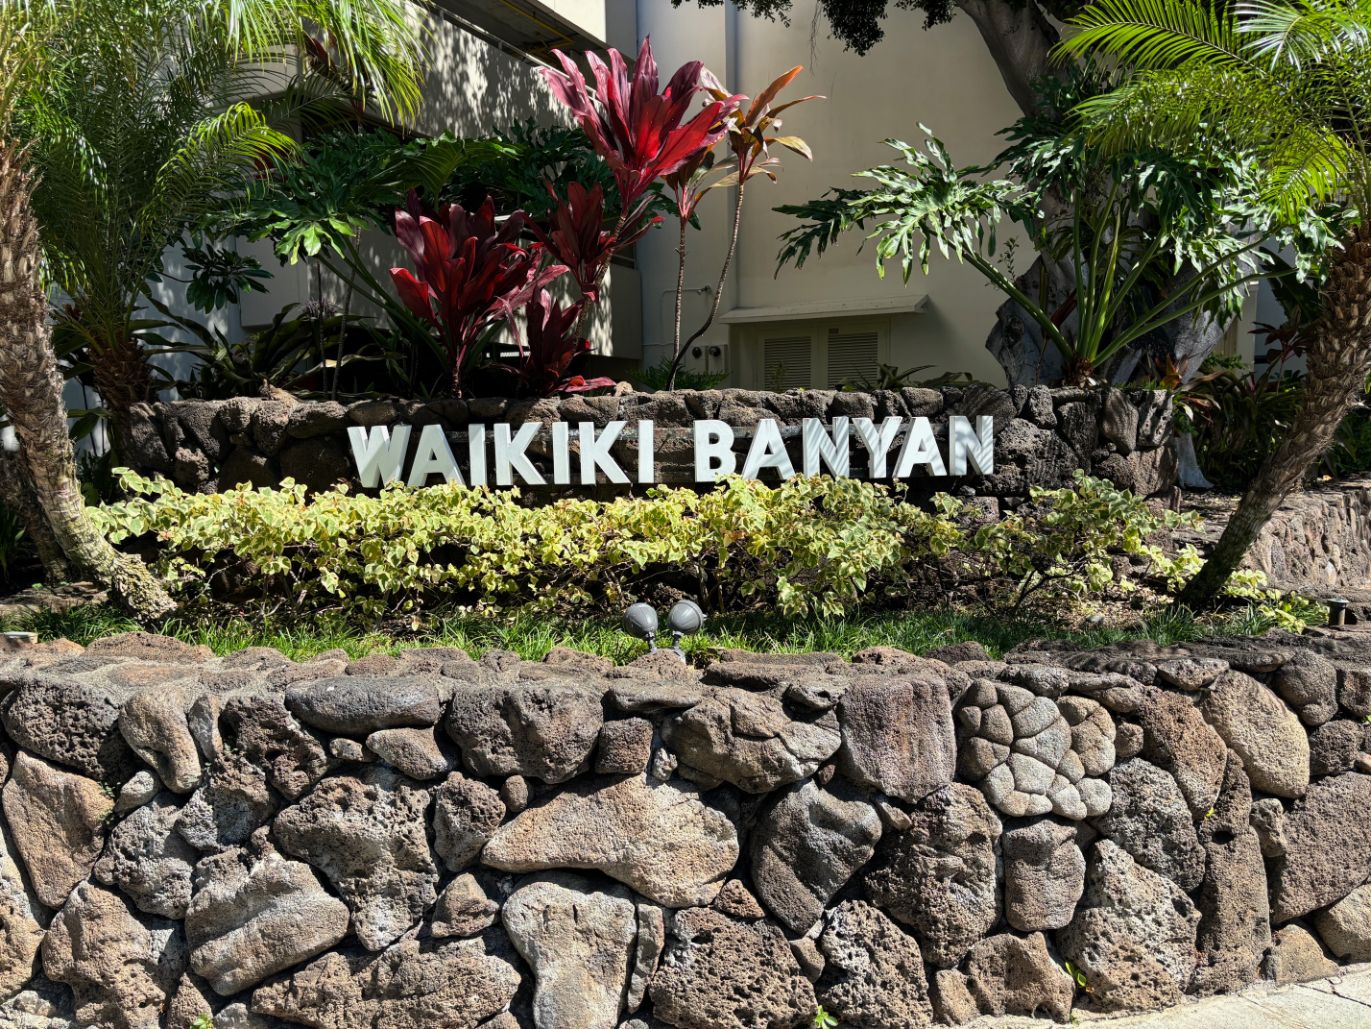 Introducing WaikikiBanyan.com – Your Gateway to Legal Vacation Rentals in Waikiki, Hawaii